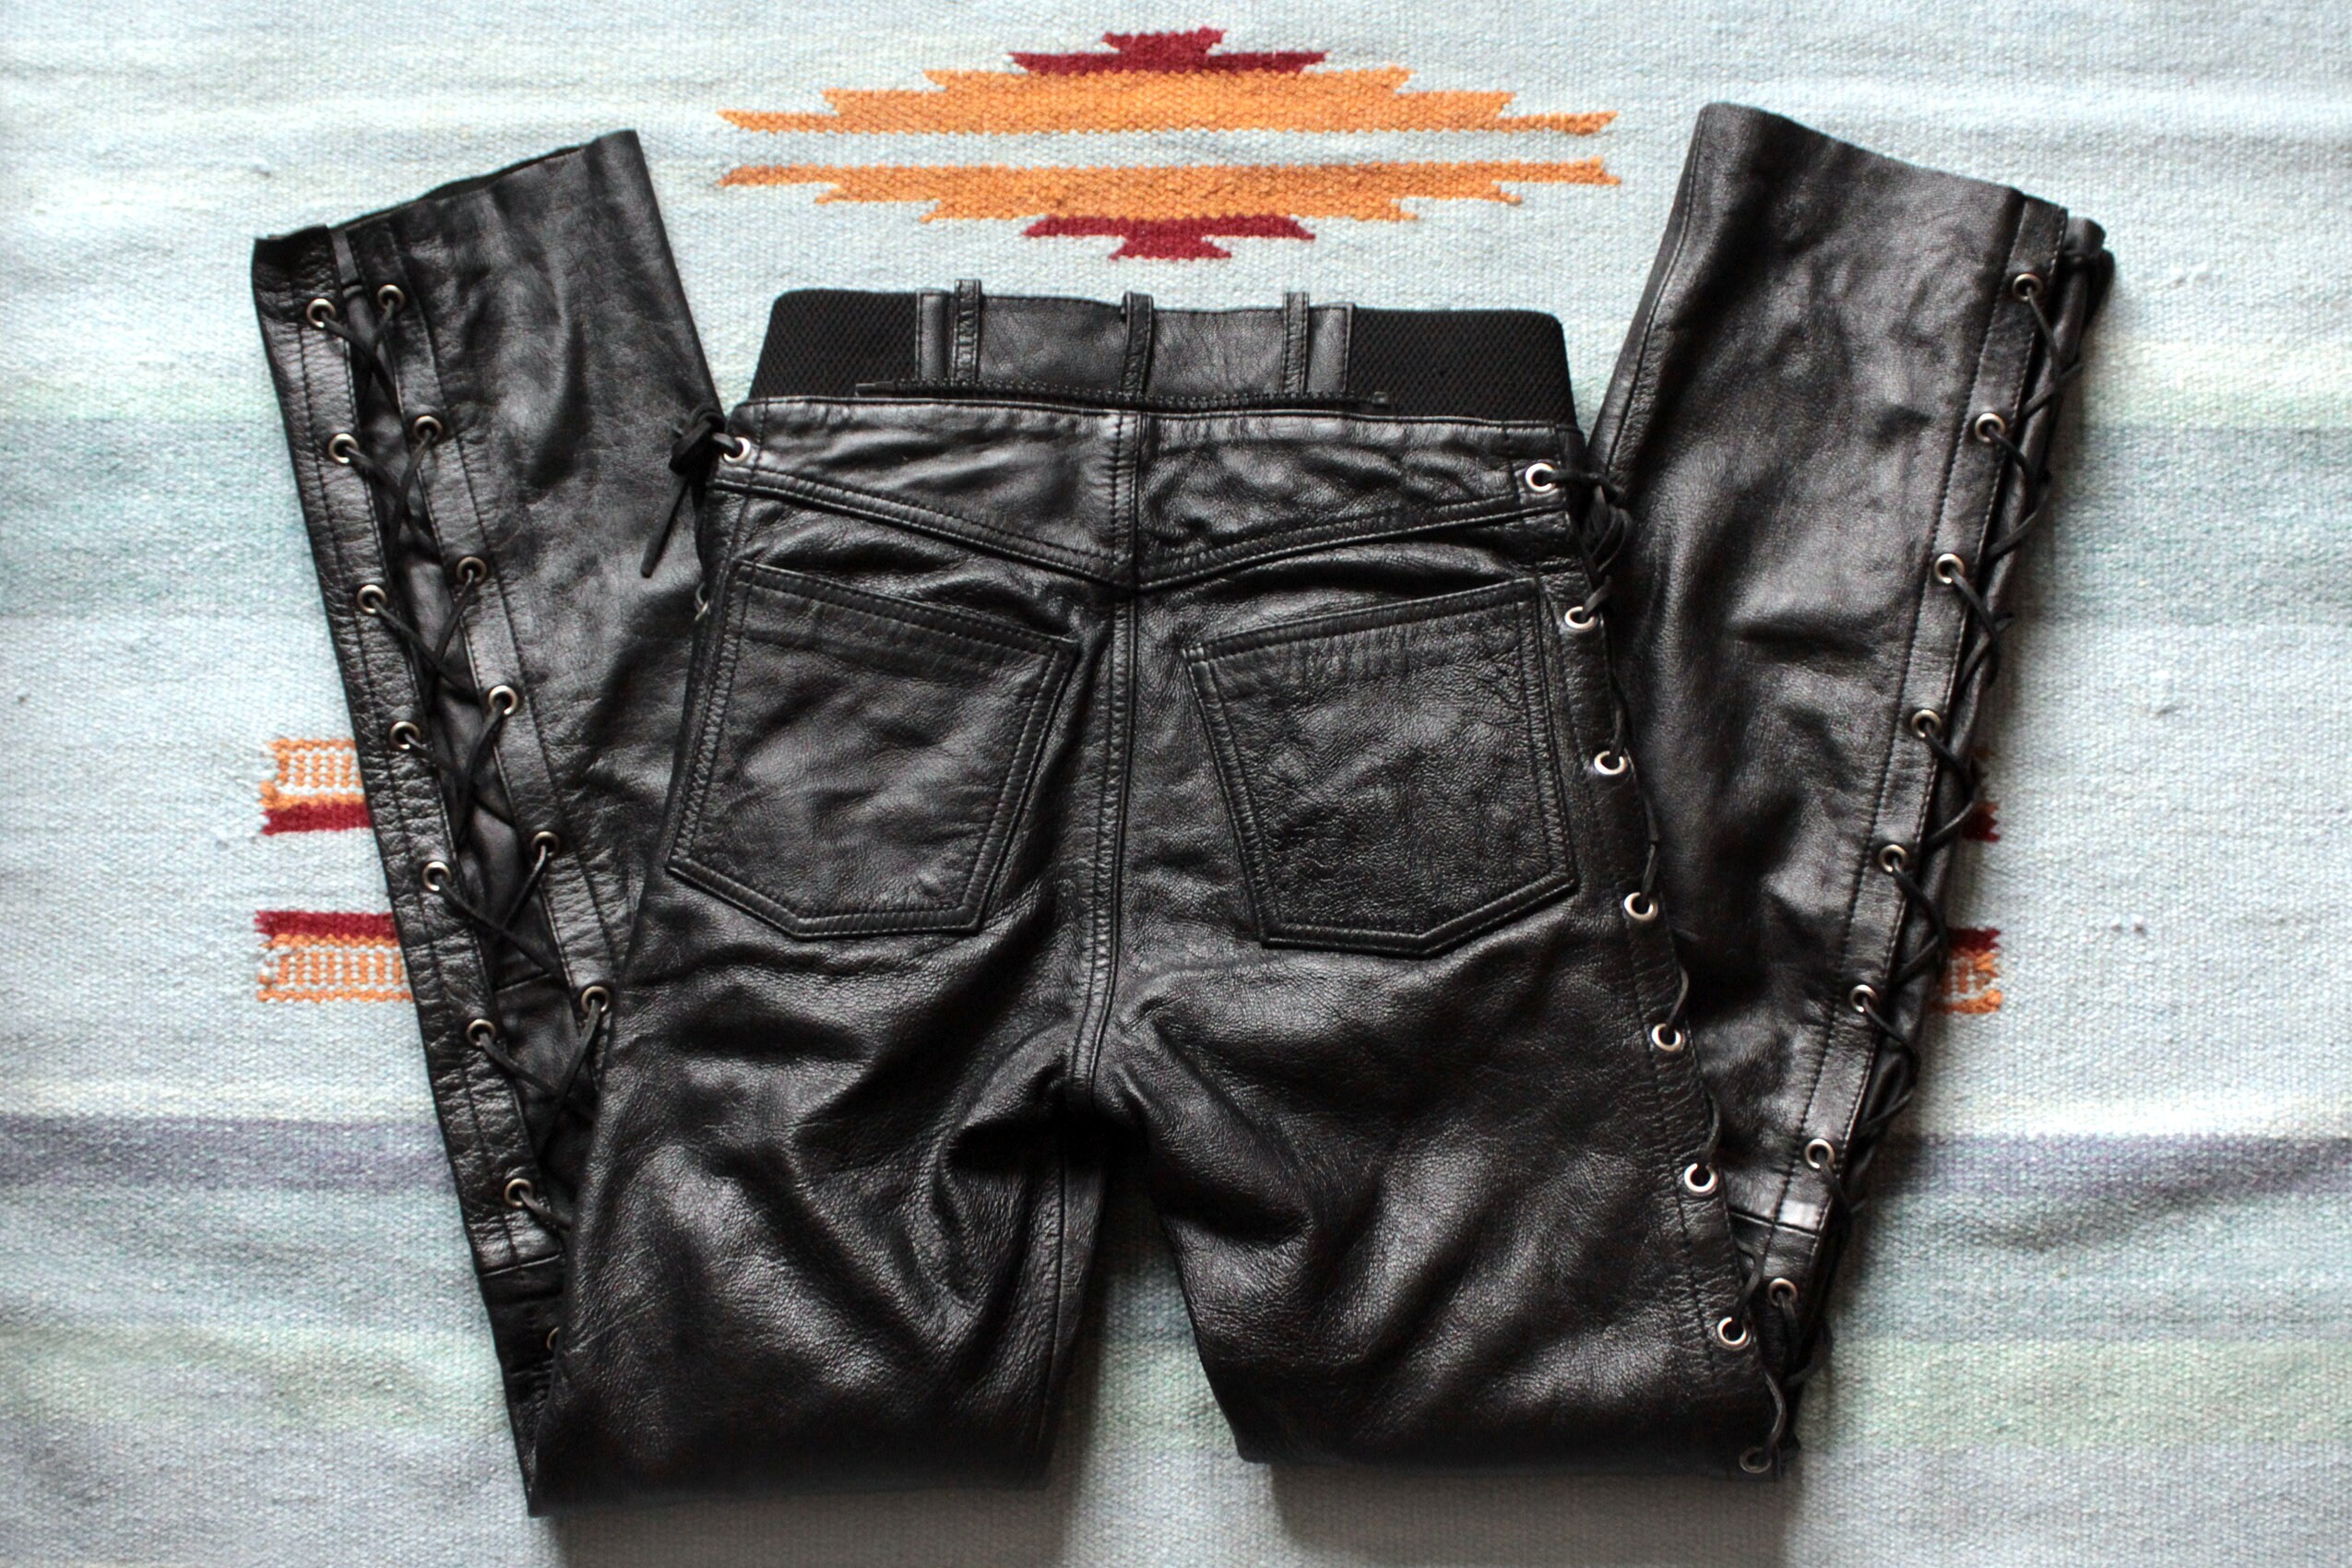 Lace up Leather Biker Pants / Black Leather Motorcycle Pants - Etsy